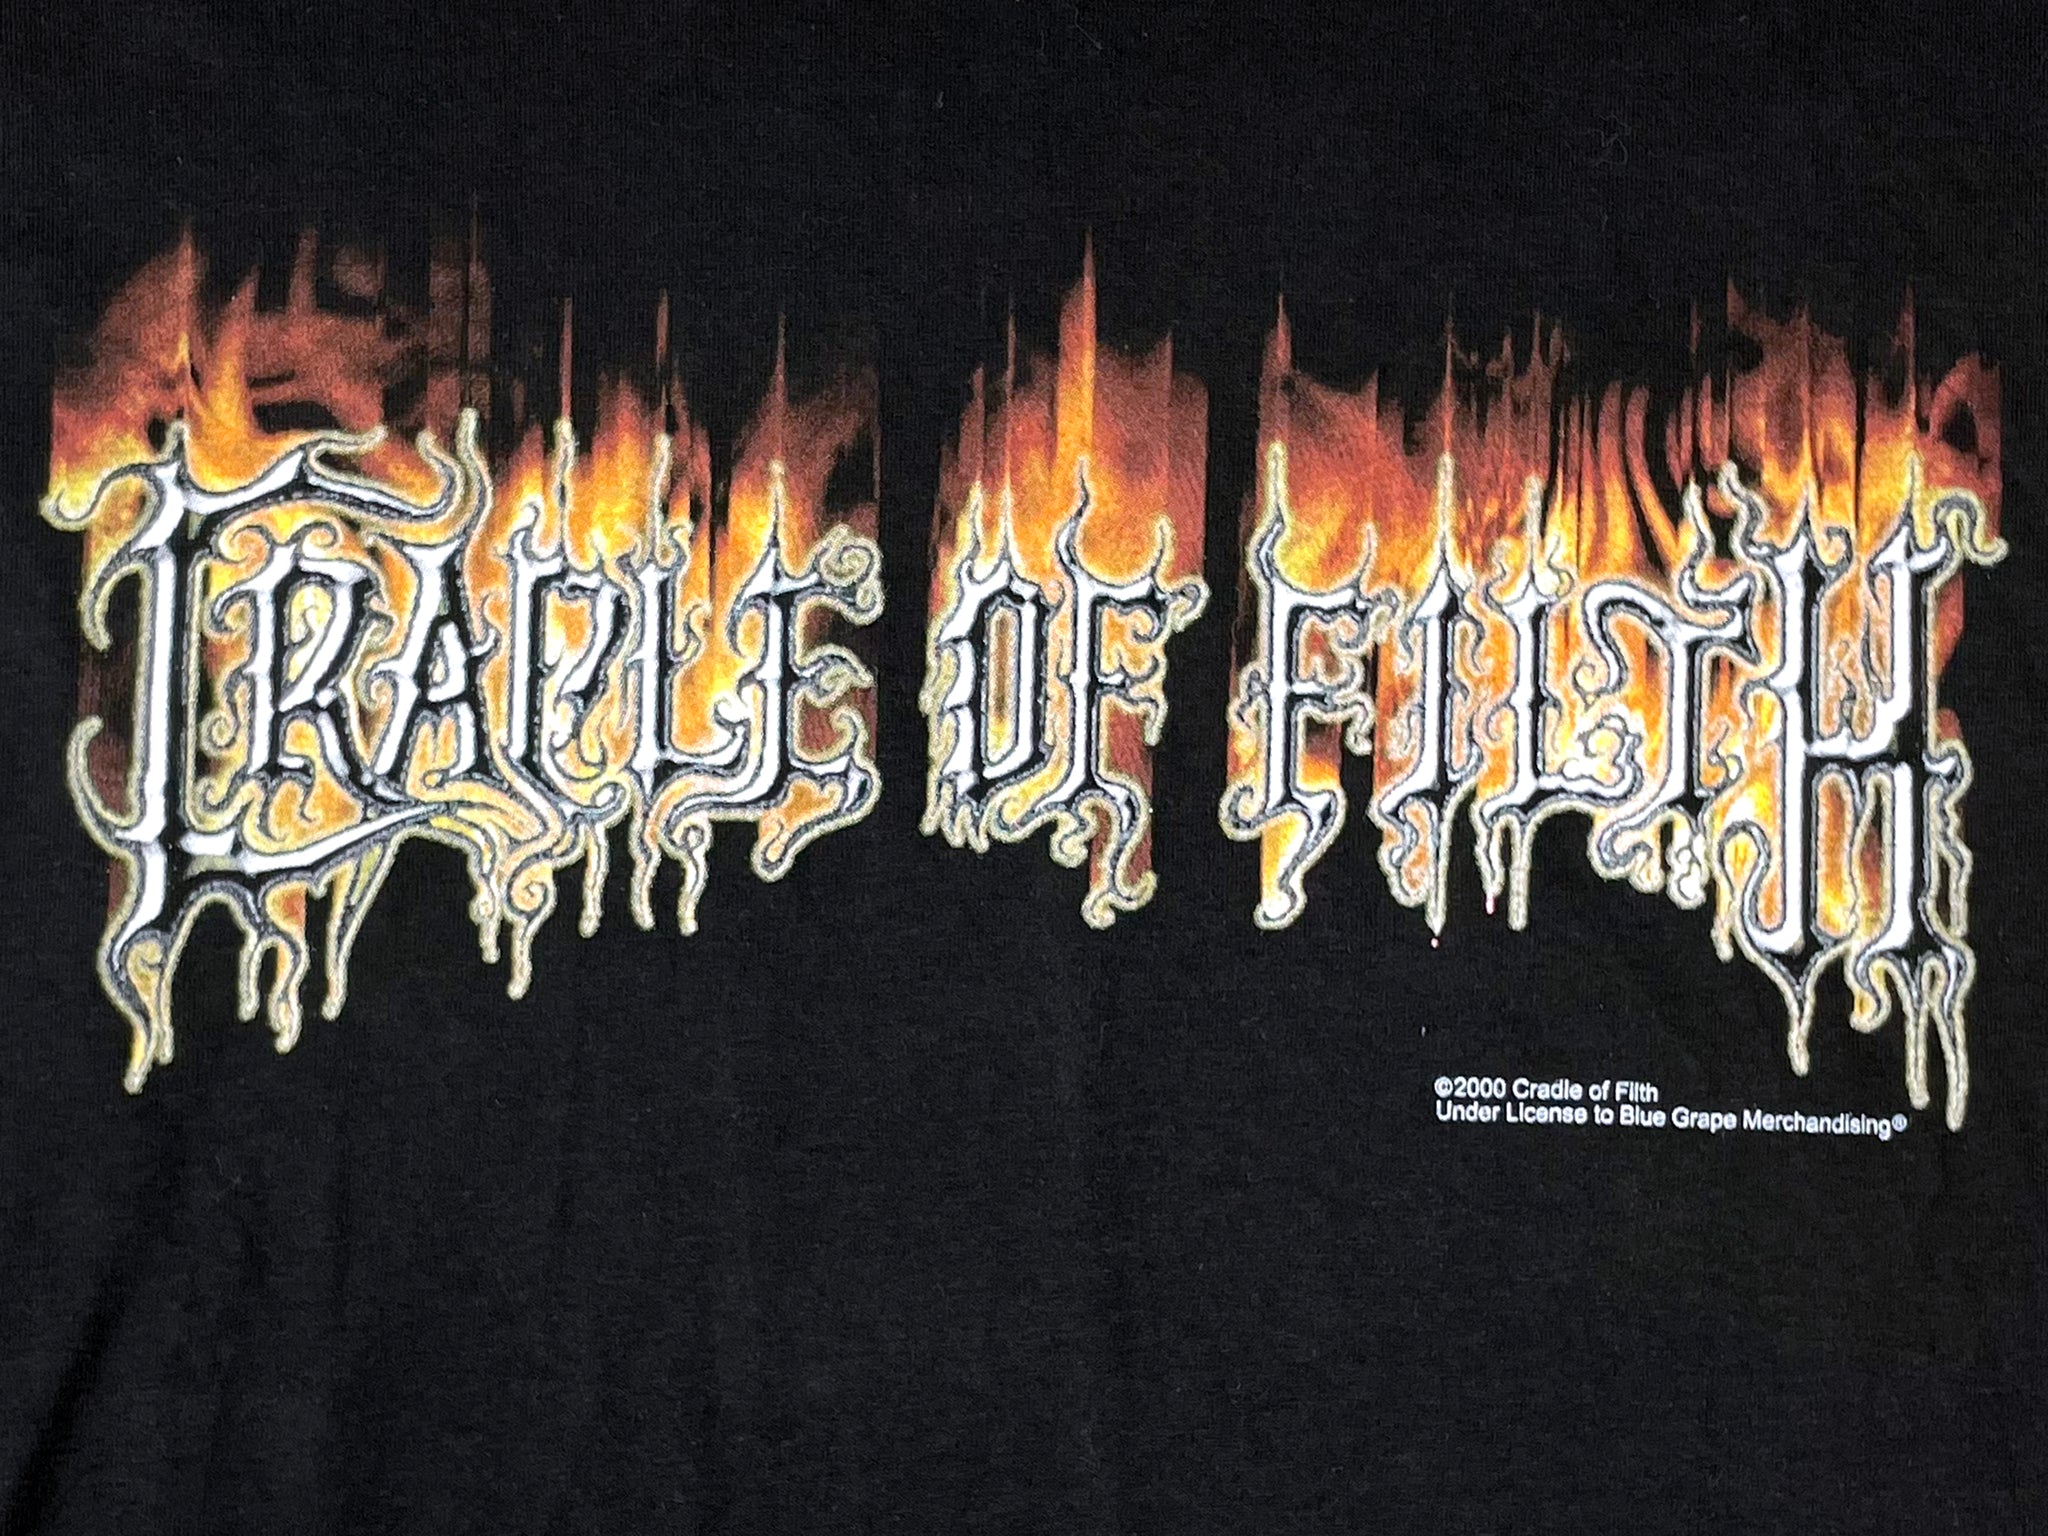 Cradle of Filth 'MIdian' L/S Shirt